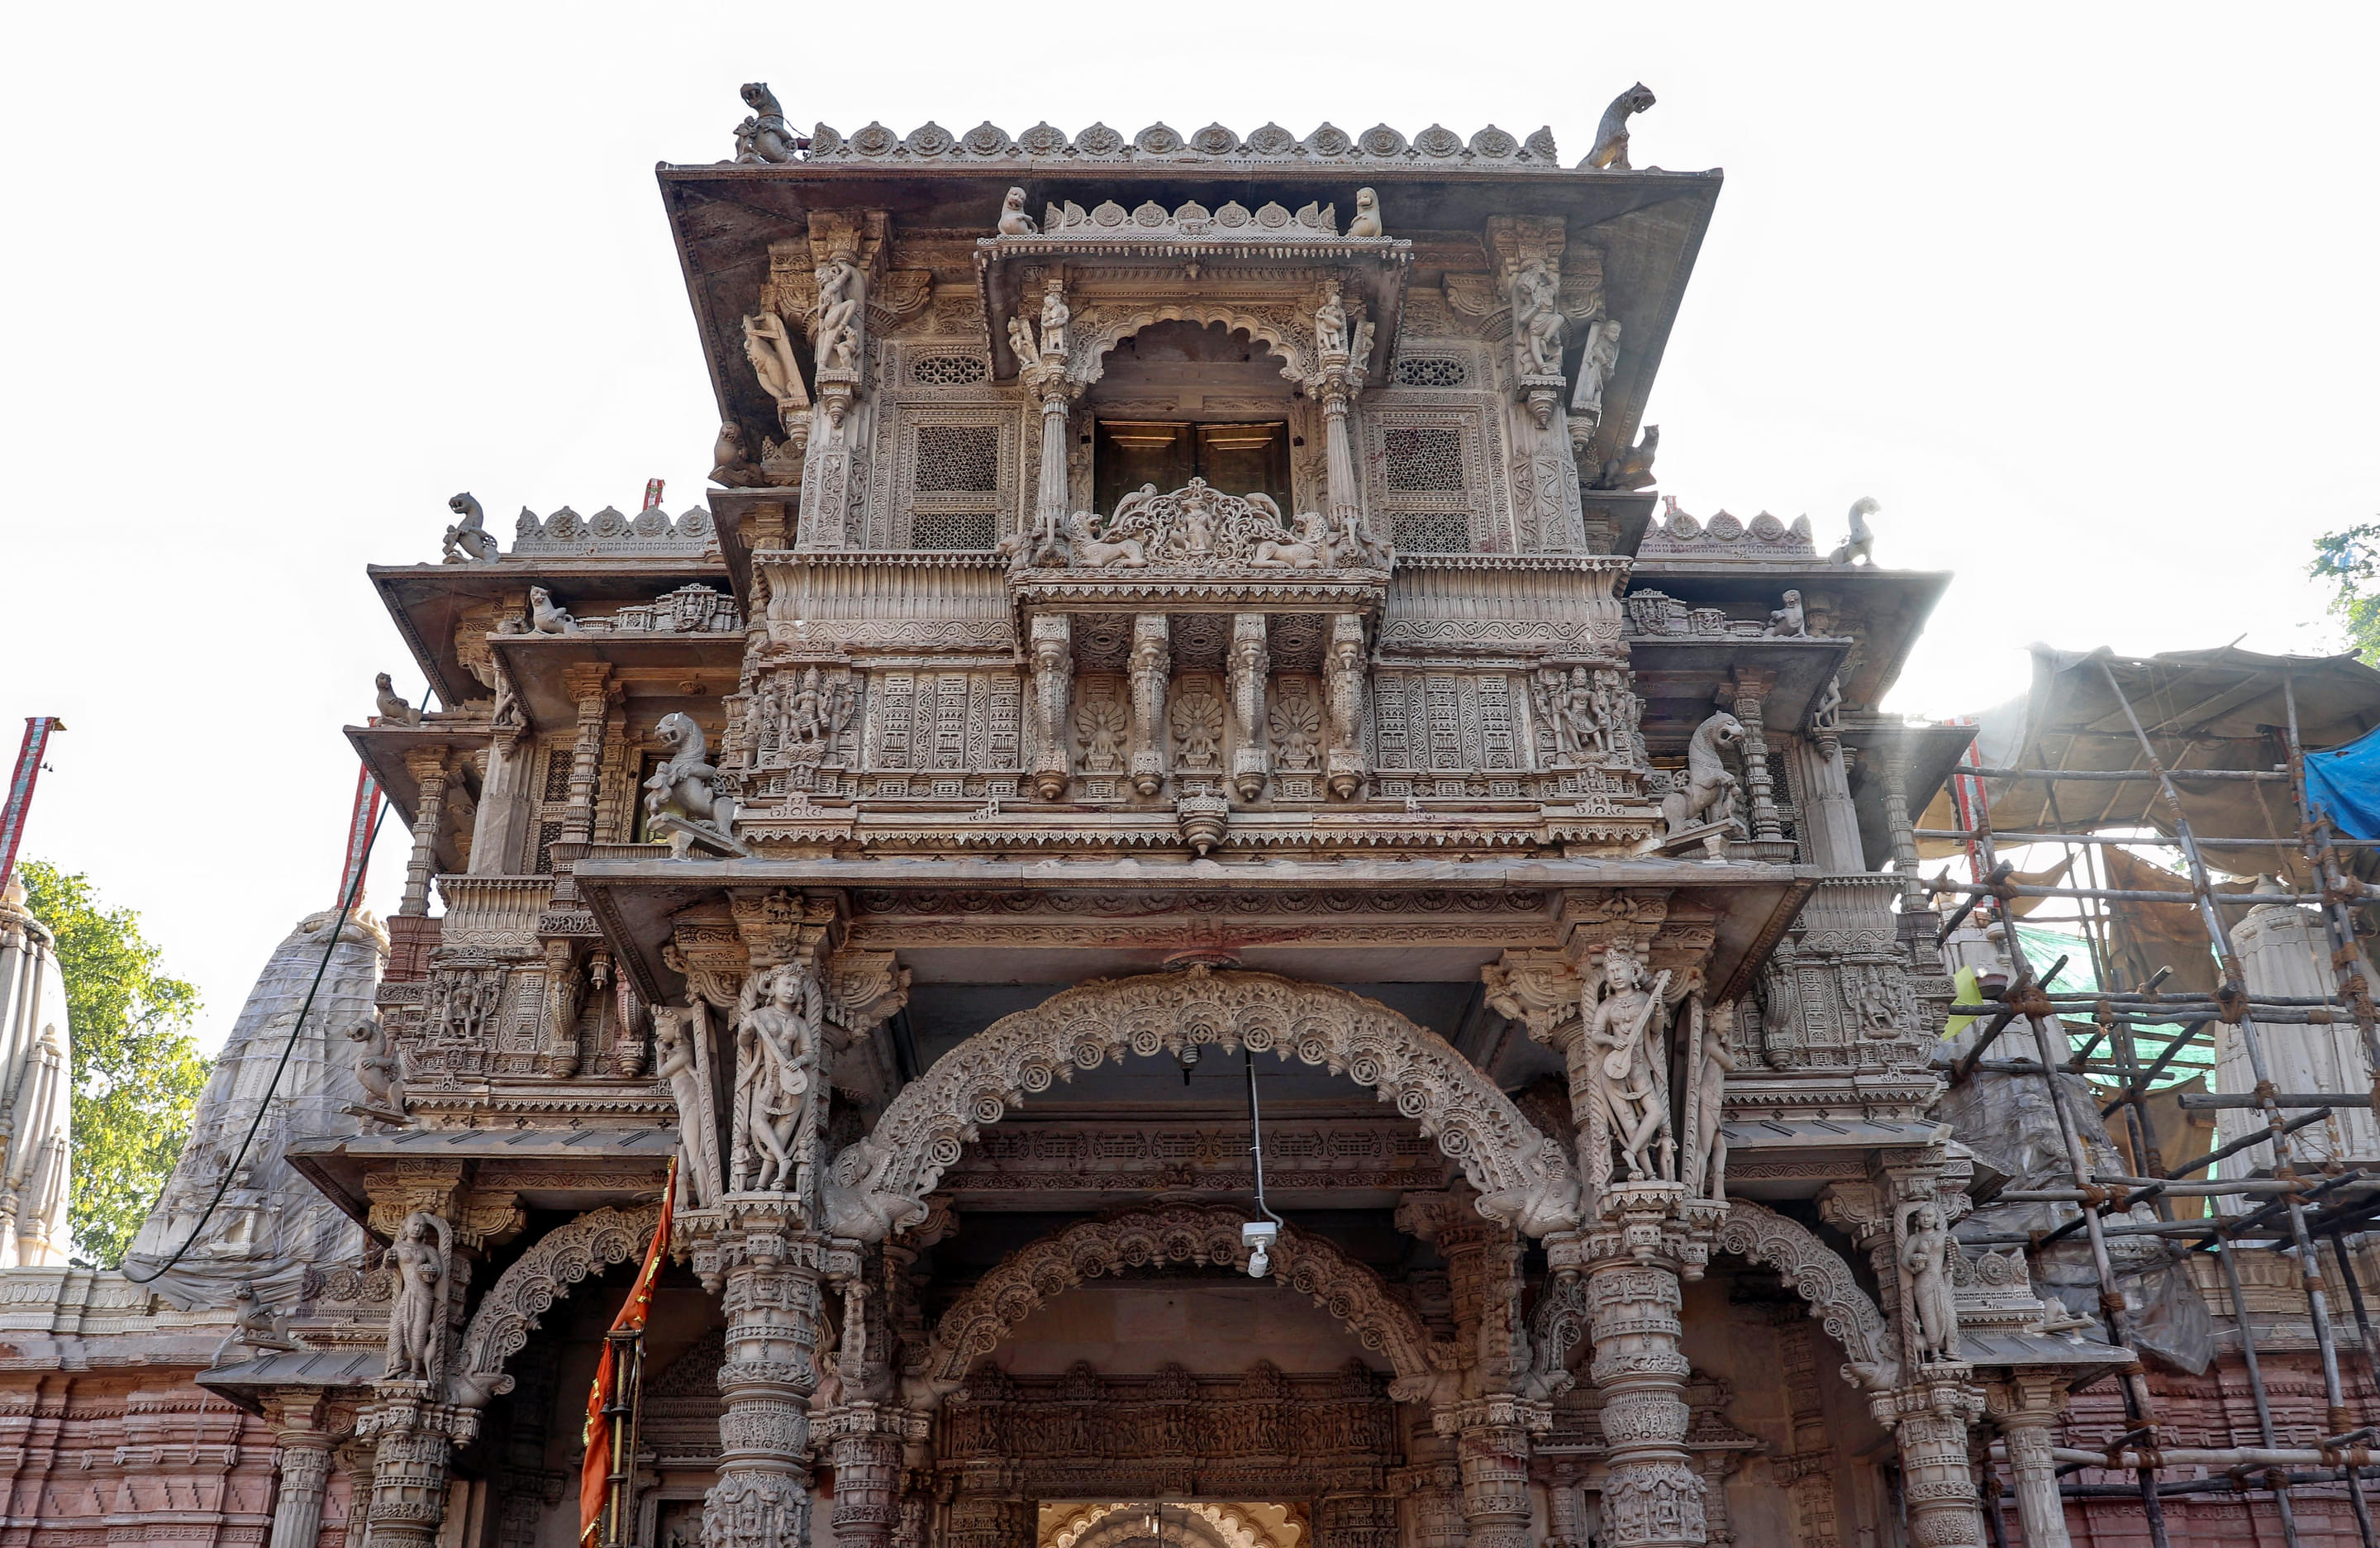 Hathisingh Jain Temple Overview